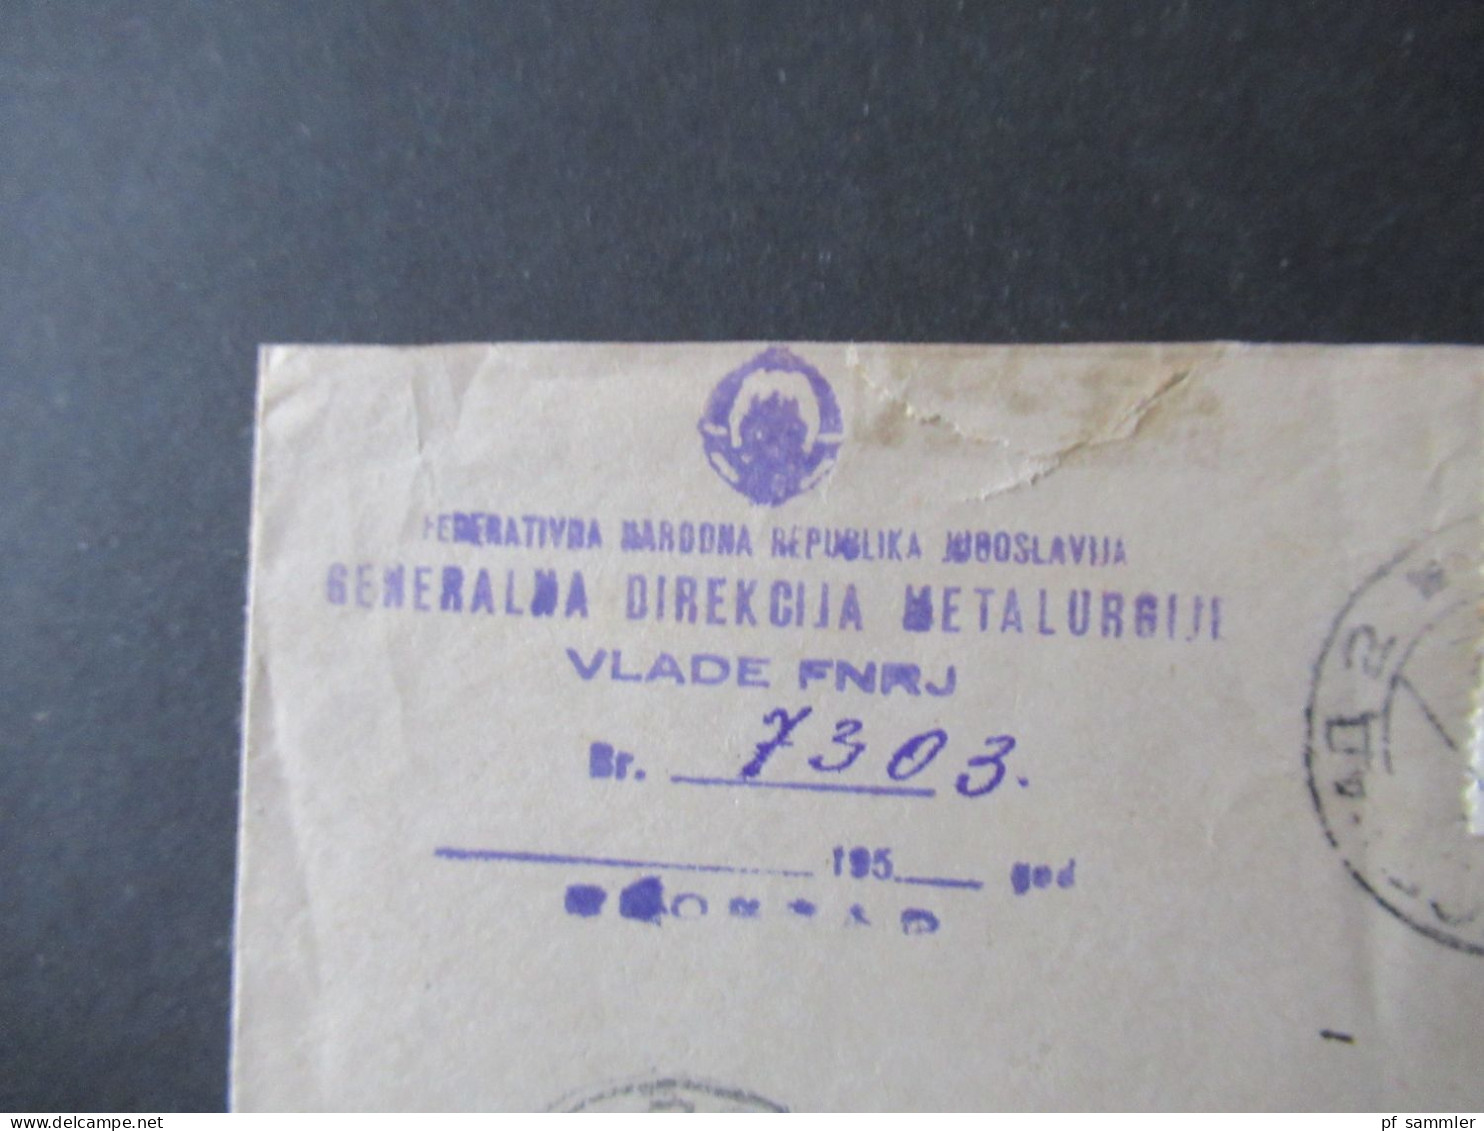 Jugoslawien 1950 Luftpost Geograd NY USA Marken Mit Aufdruck FNR / Generalna Direkcija Metalurgiji Vlade FNRJ - Lettres & Documents